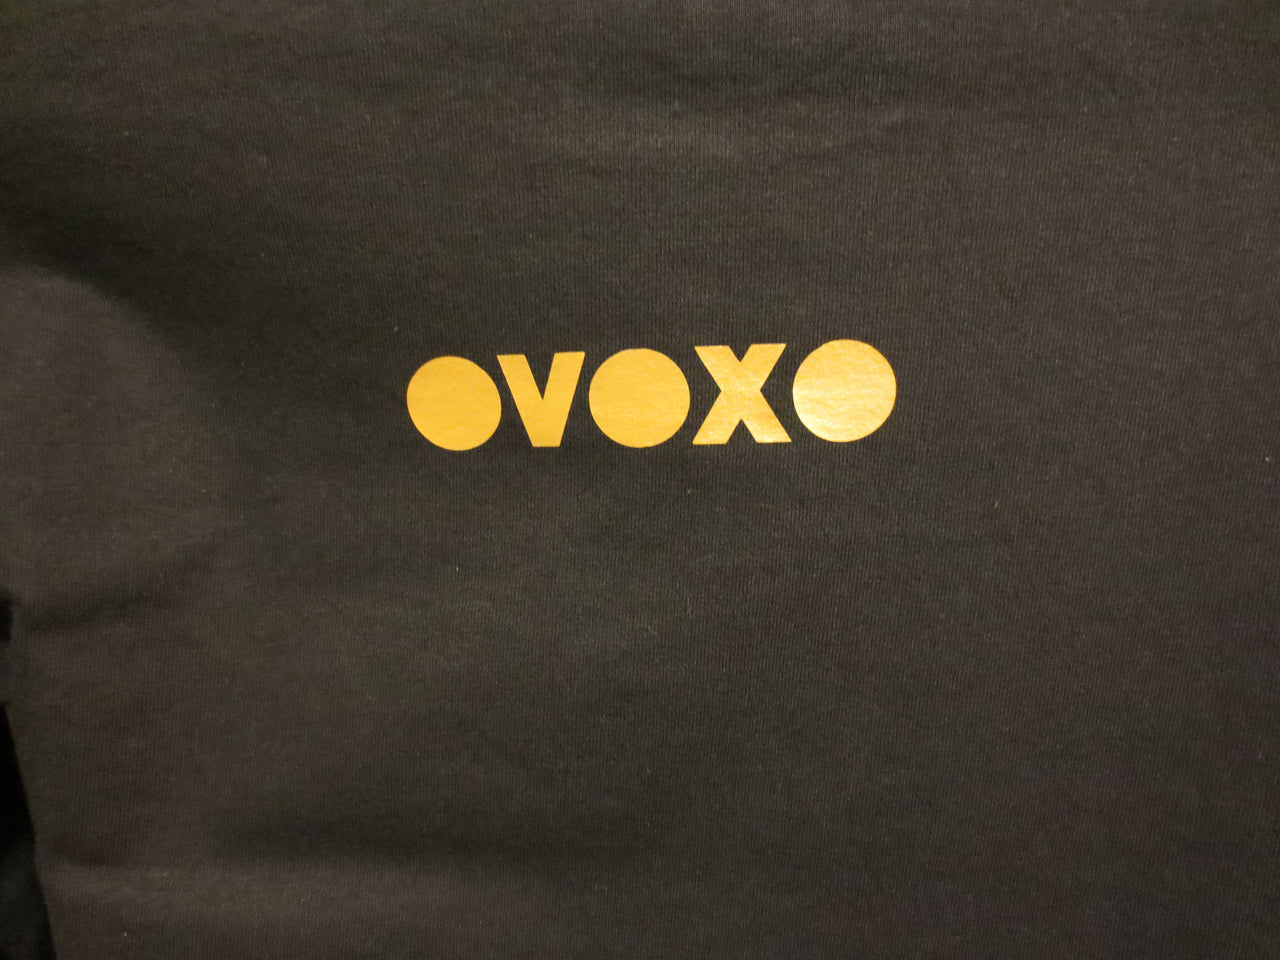 Ovo Drake October's Very Own Ovoxo Owl Gang Longsleeve Black Tshirt - TshirtNow.net - 5